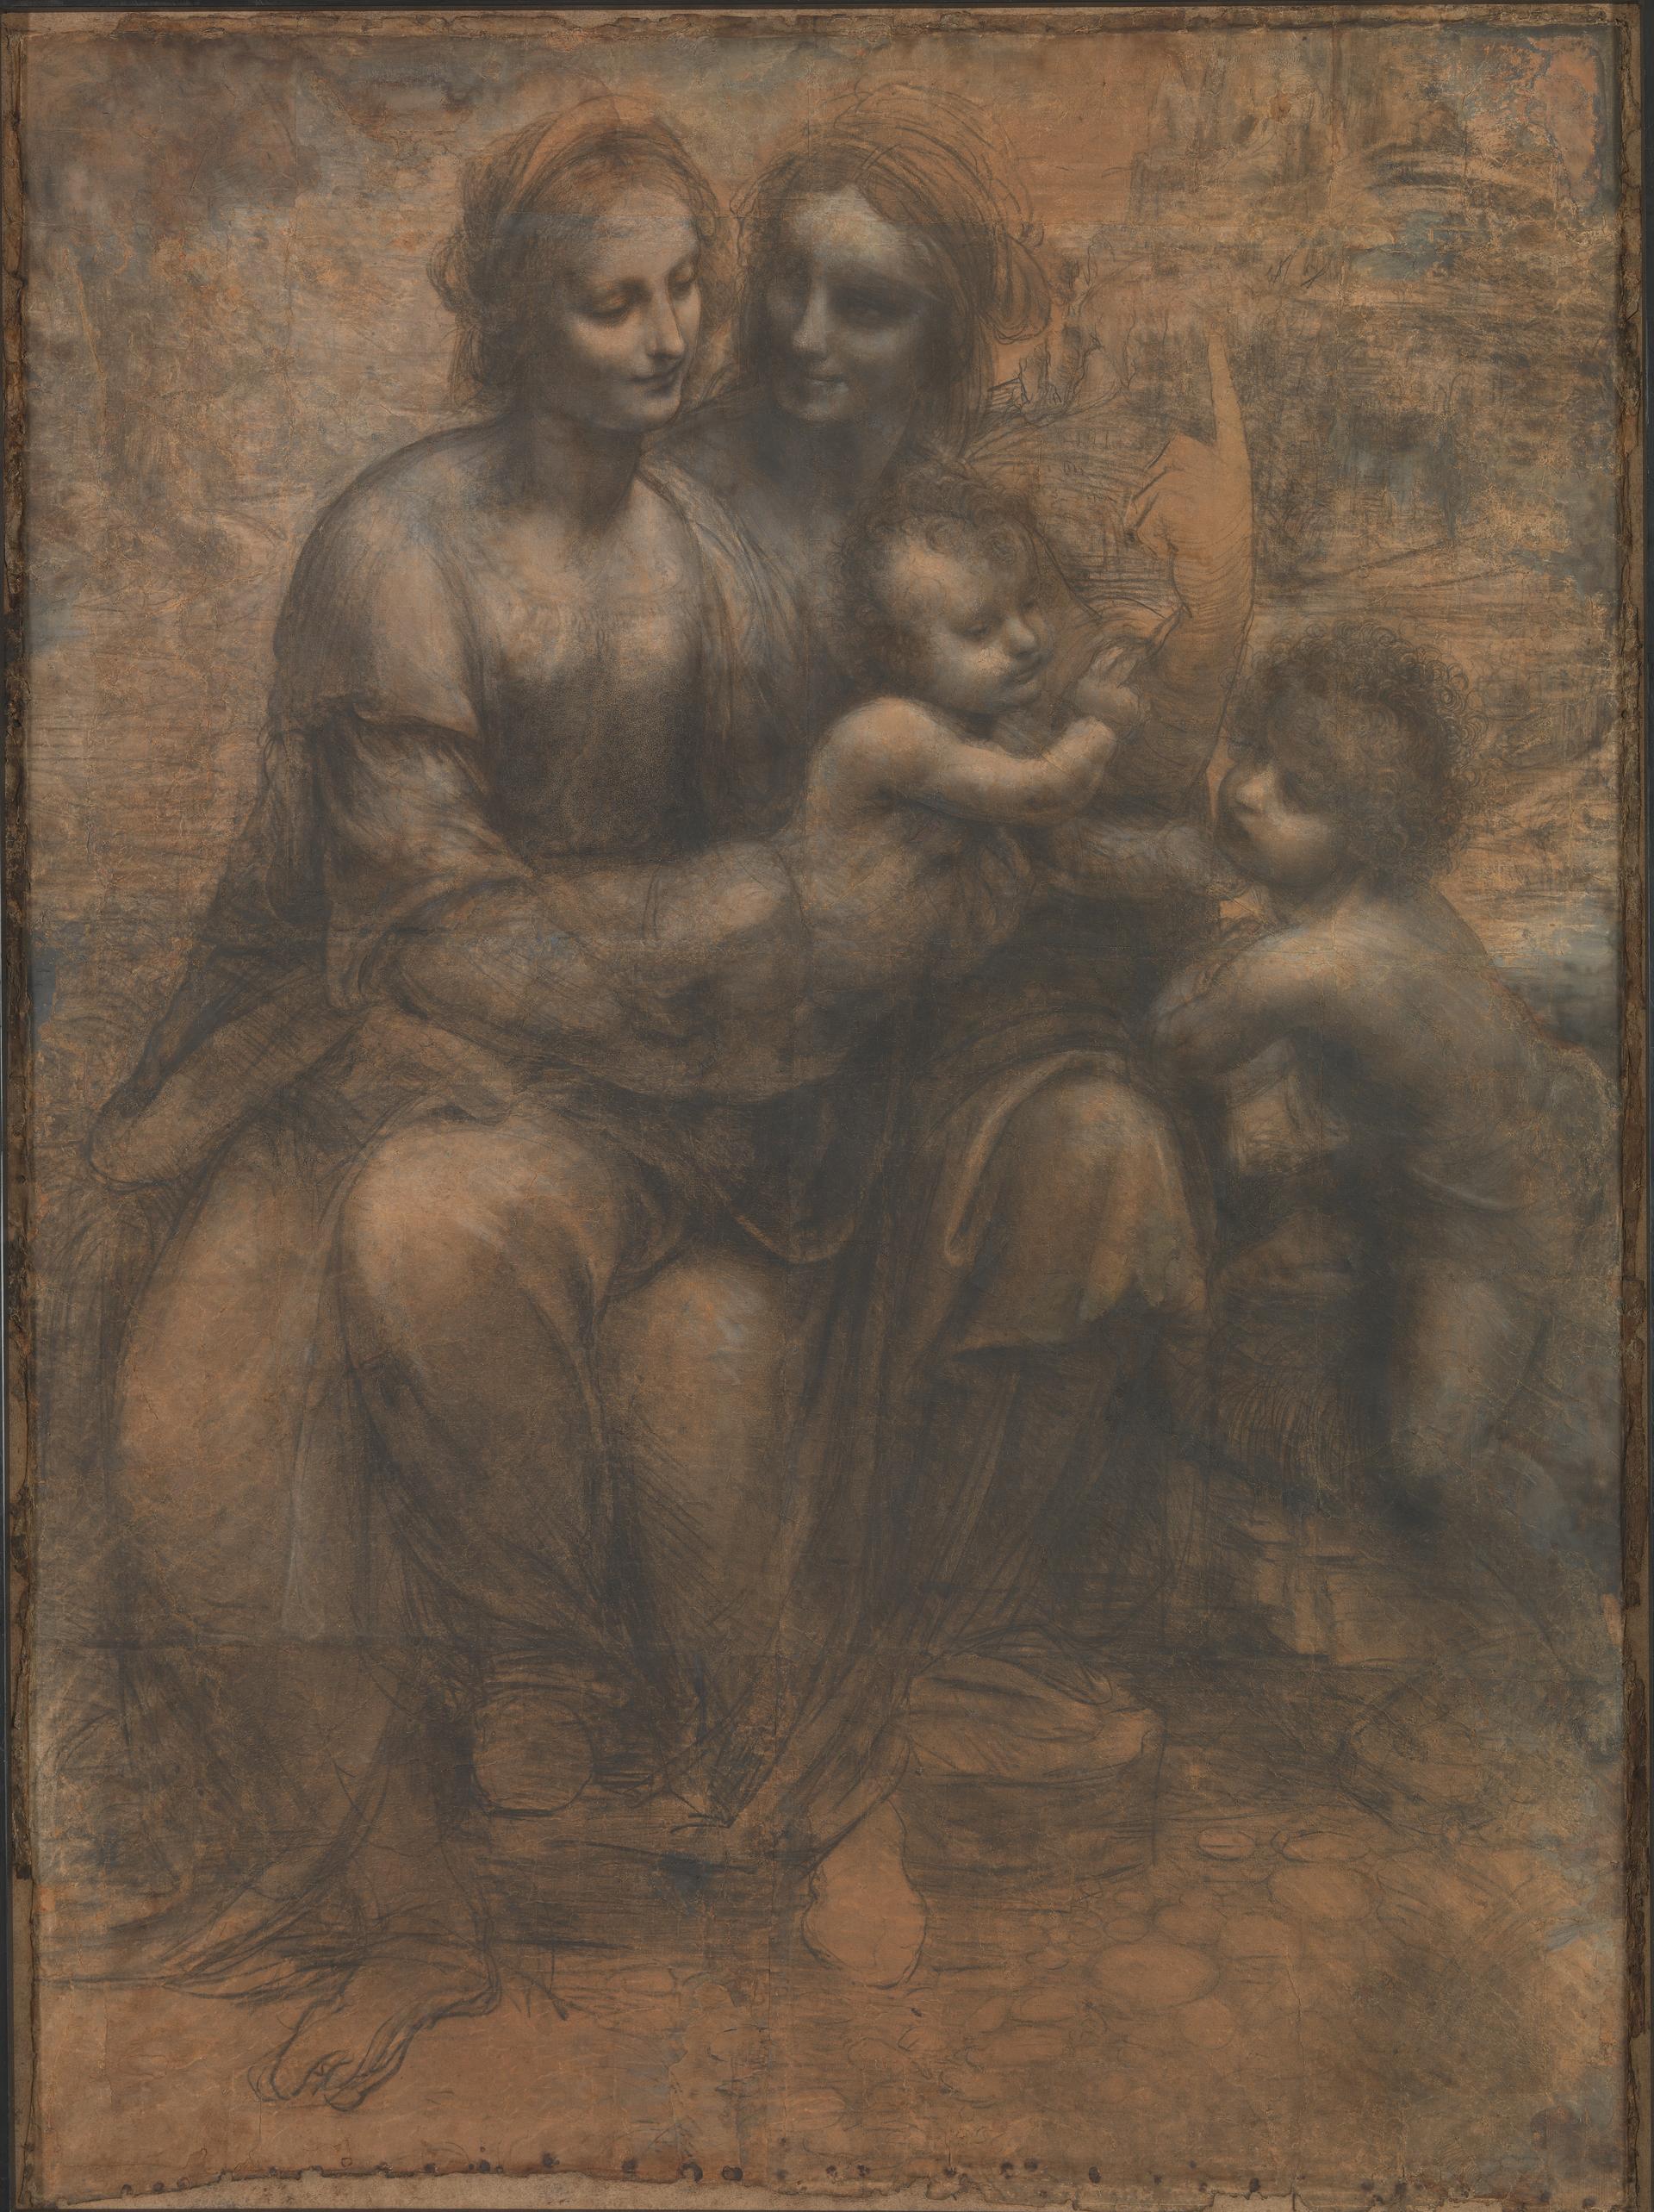 The Burlington House Cartoon by Leonardo da Vinci - c. 1499-1500 - 141.5 × 104.6 cm National Gallery